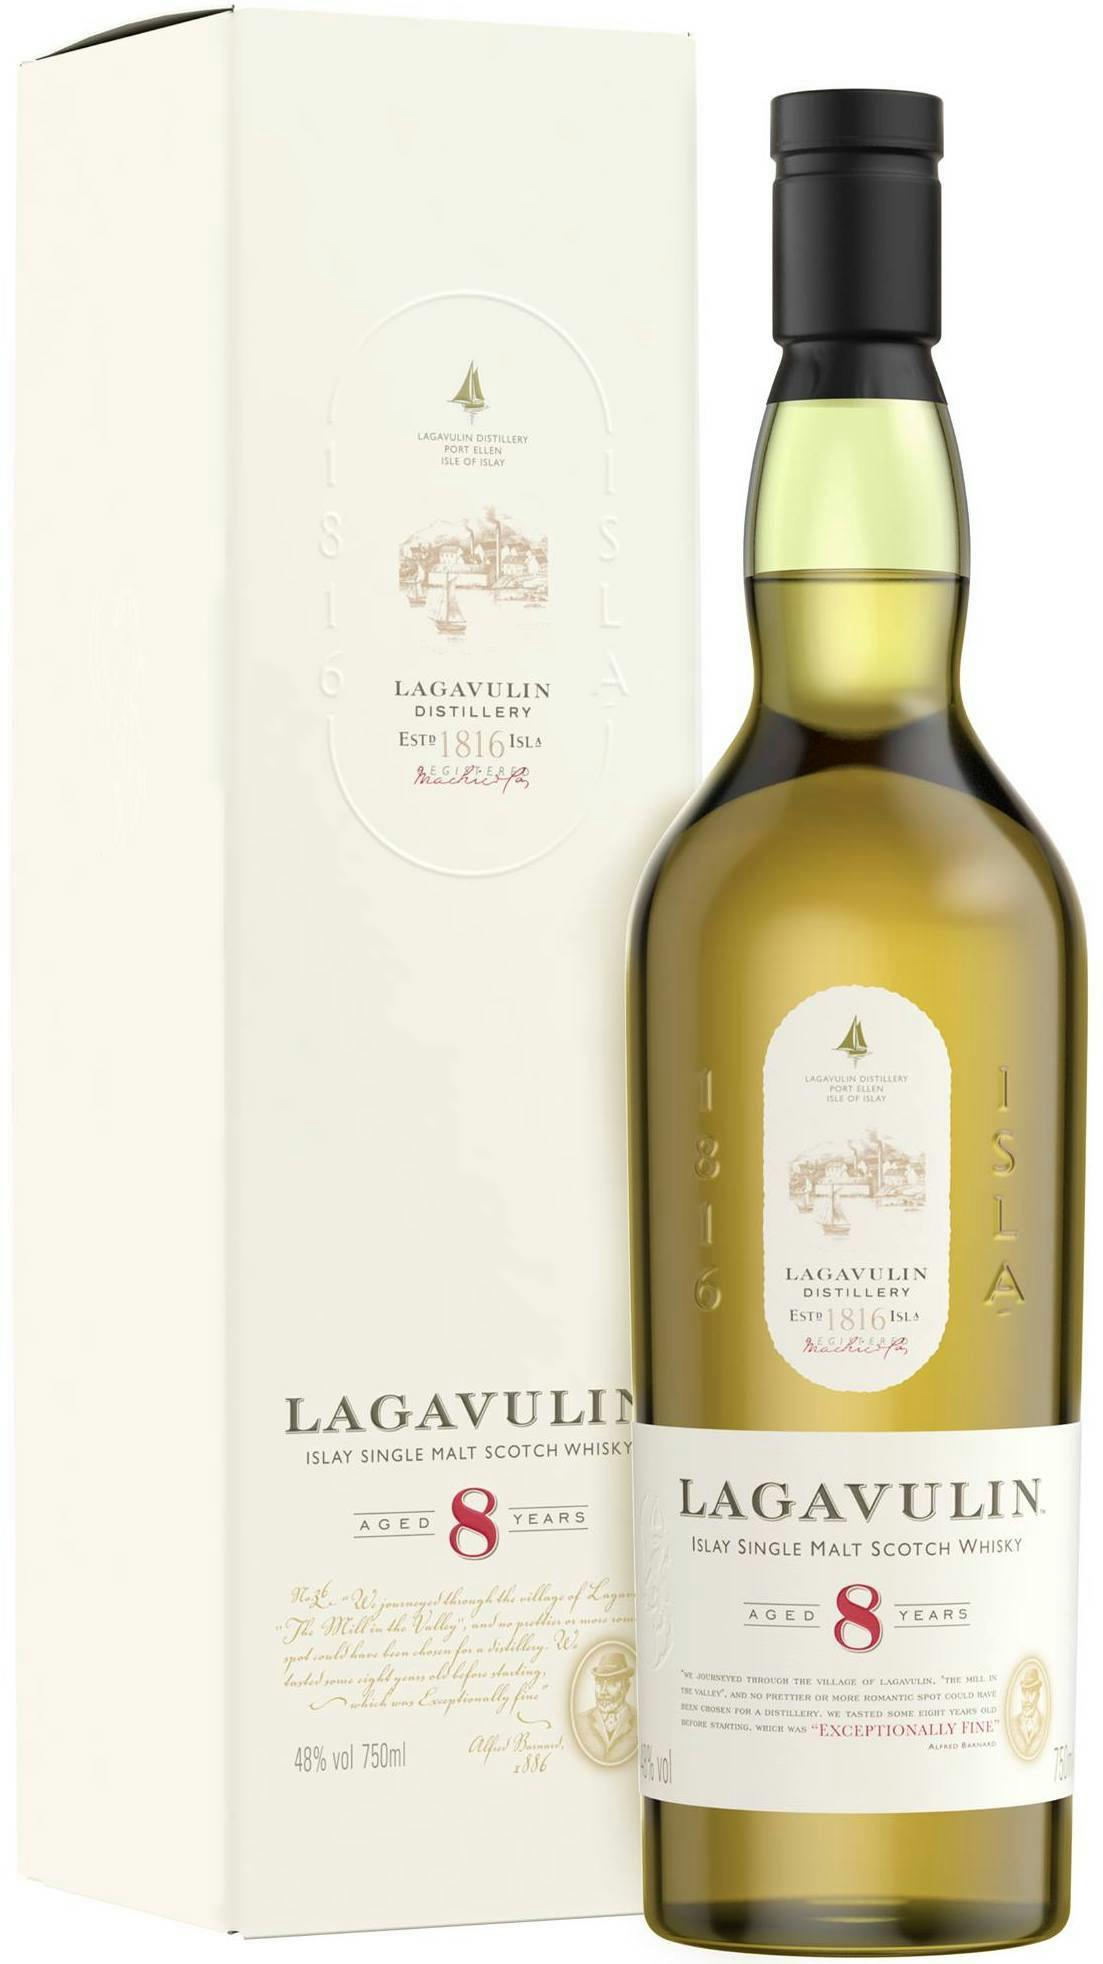 Lagavulin Single Malt Scotch Whisky year old 750ml Petite Cellars